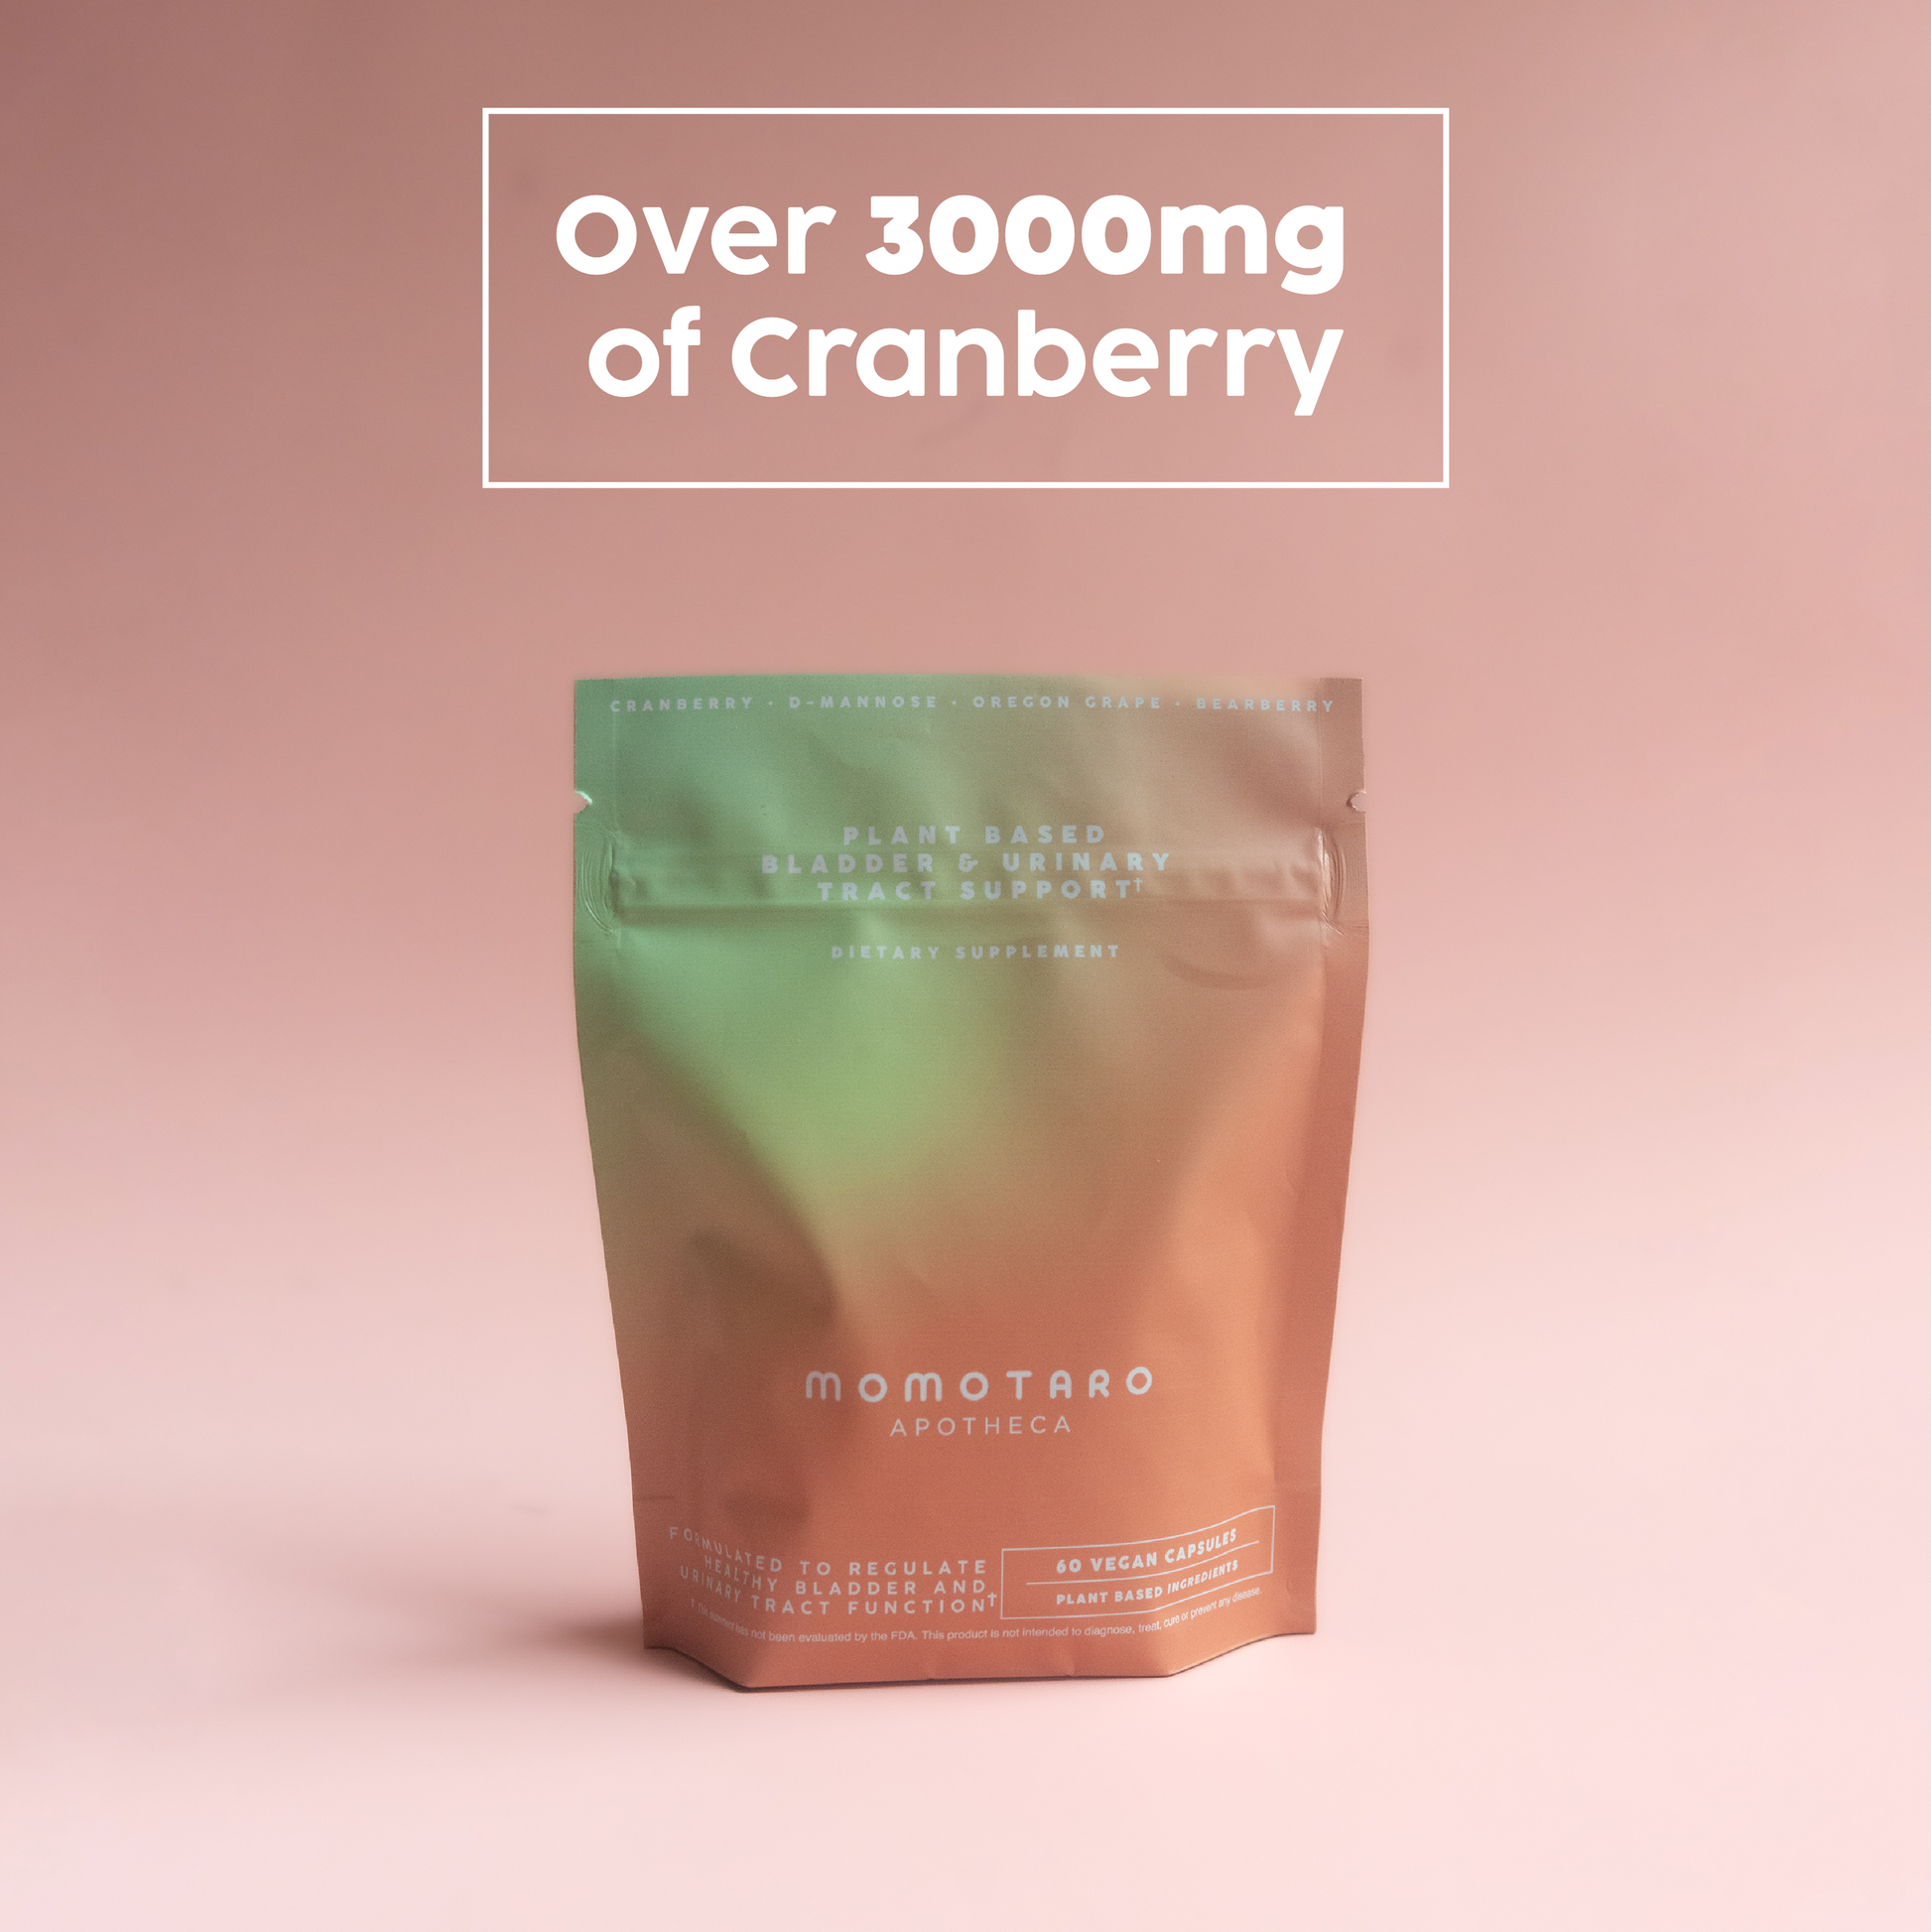 Momotaro Apotheca's Supplement has 3000mg of Cranberry